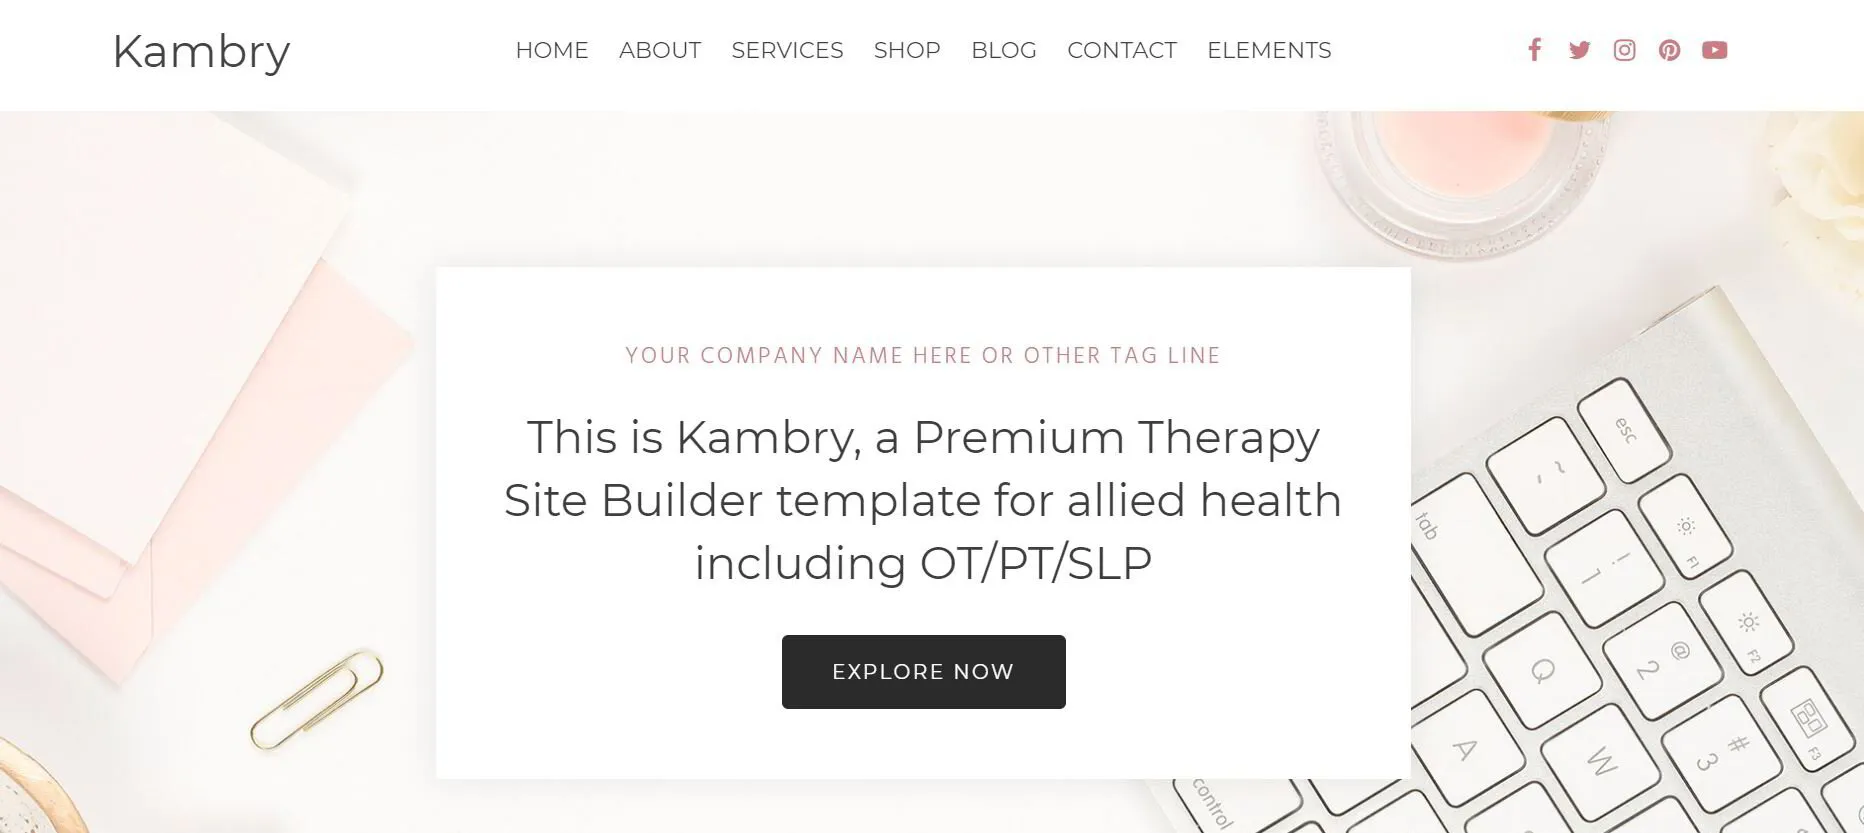 Kambry Old Website Template